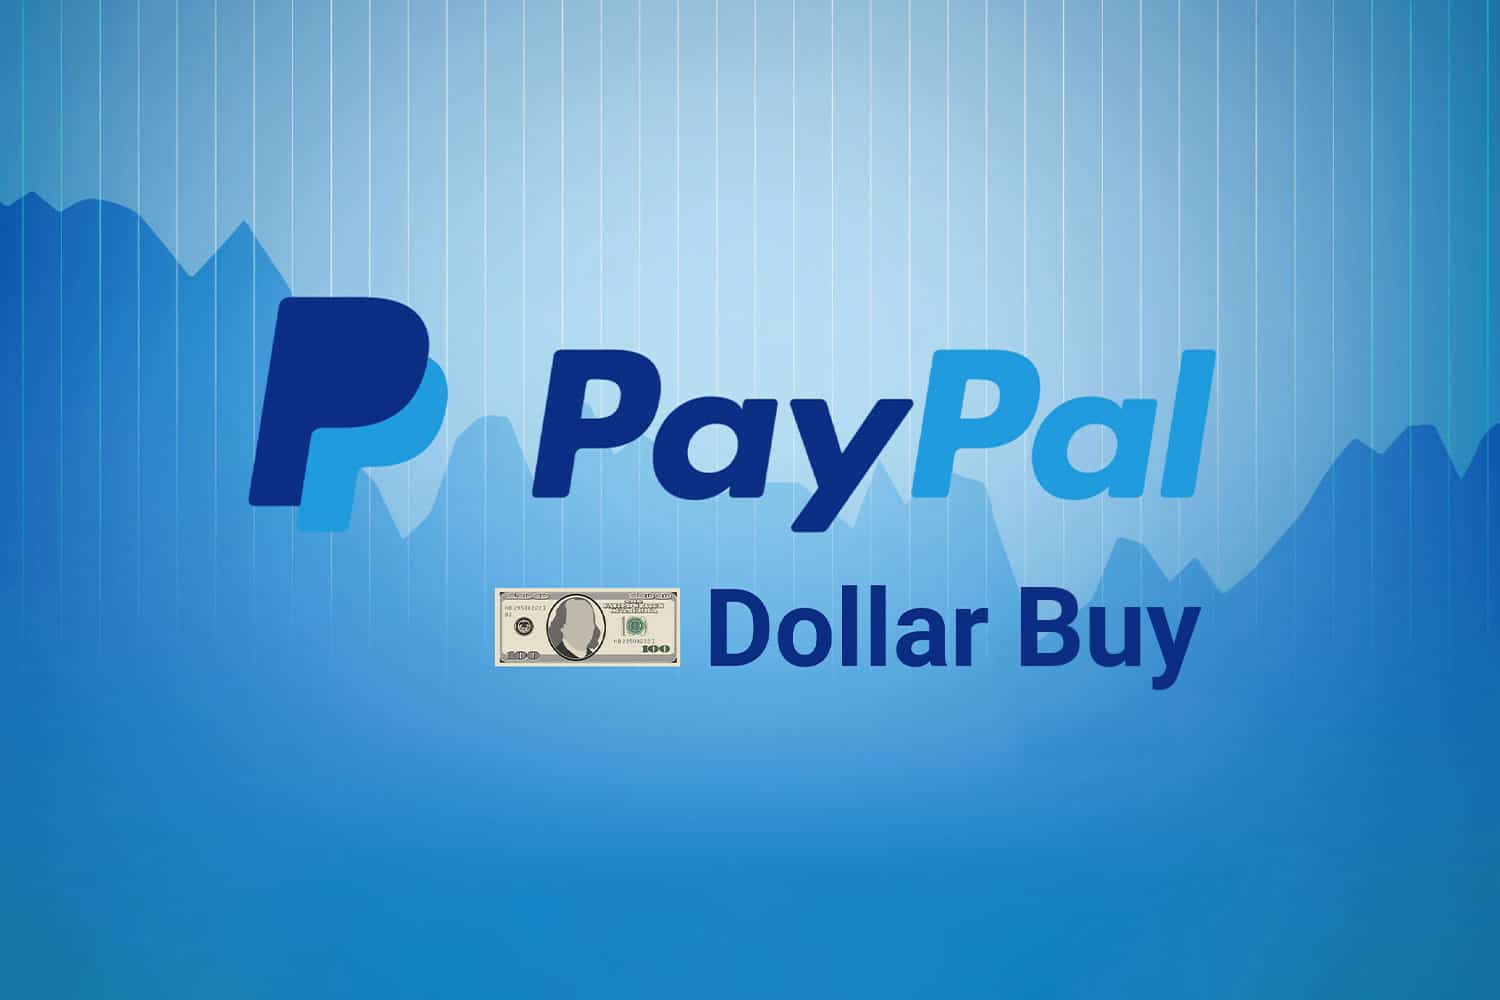 Paypal Dollar Buy And Sell In Bangladesh